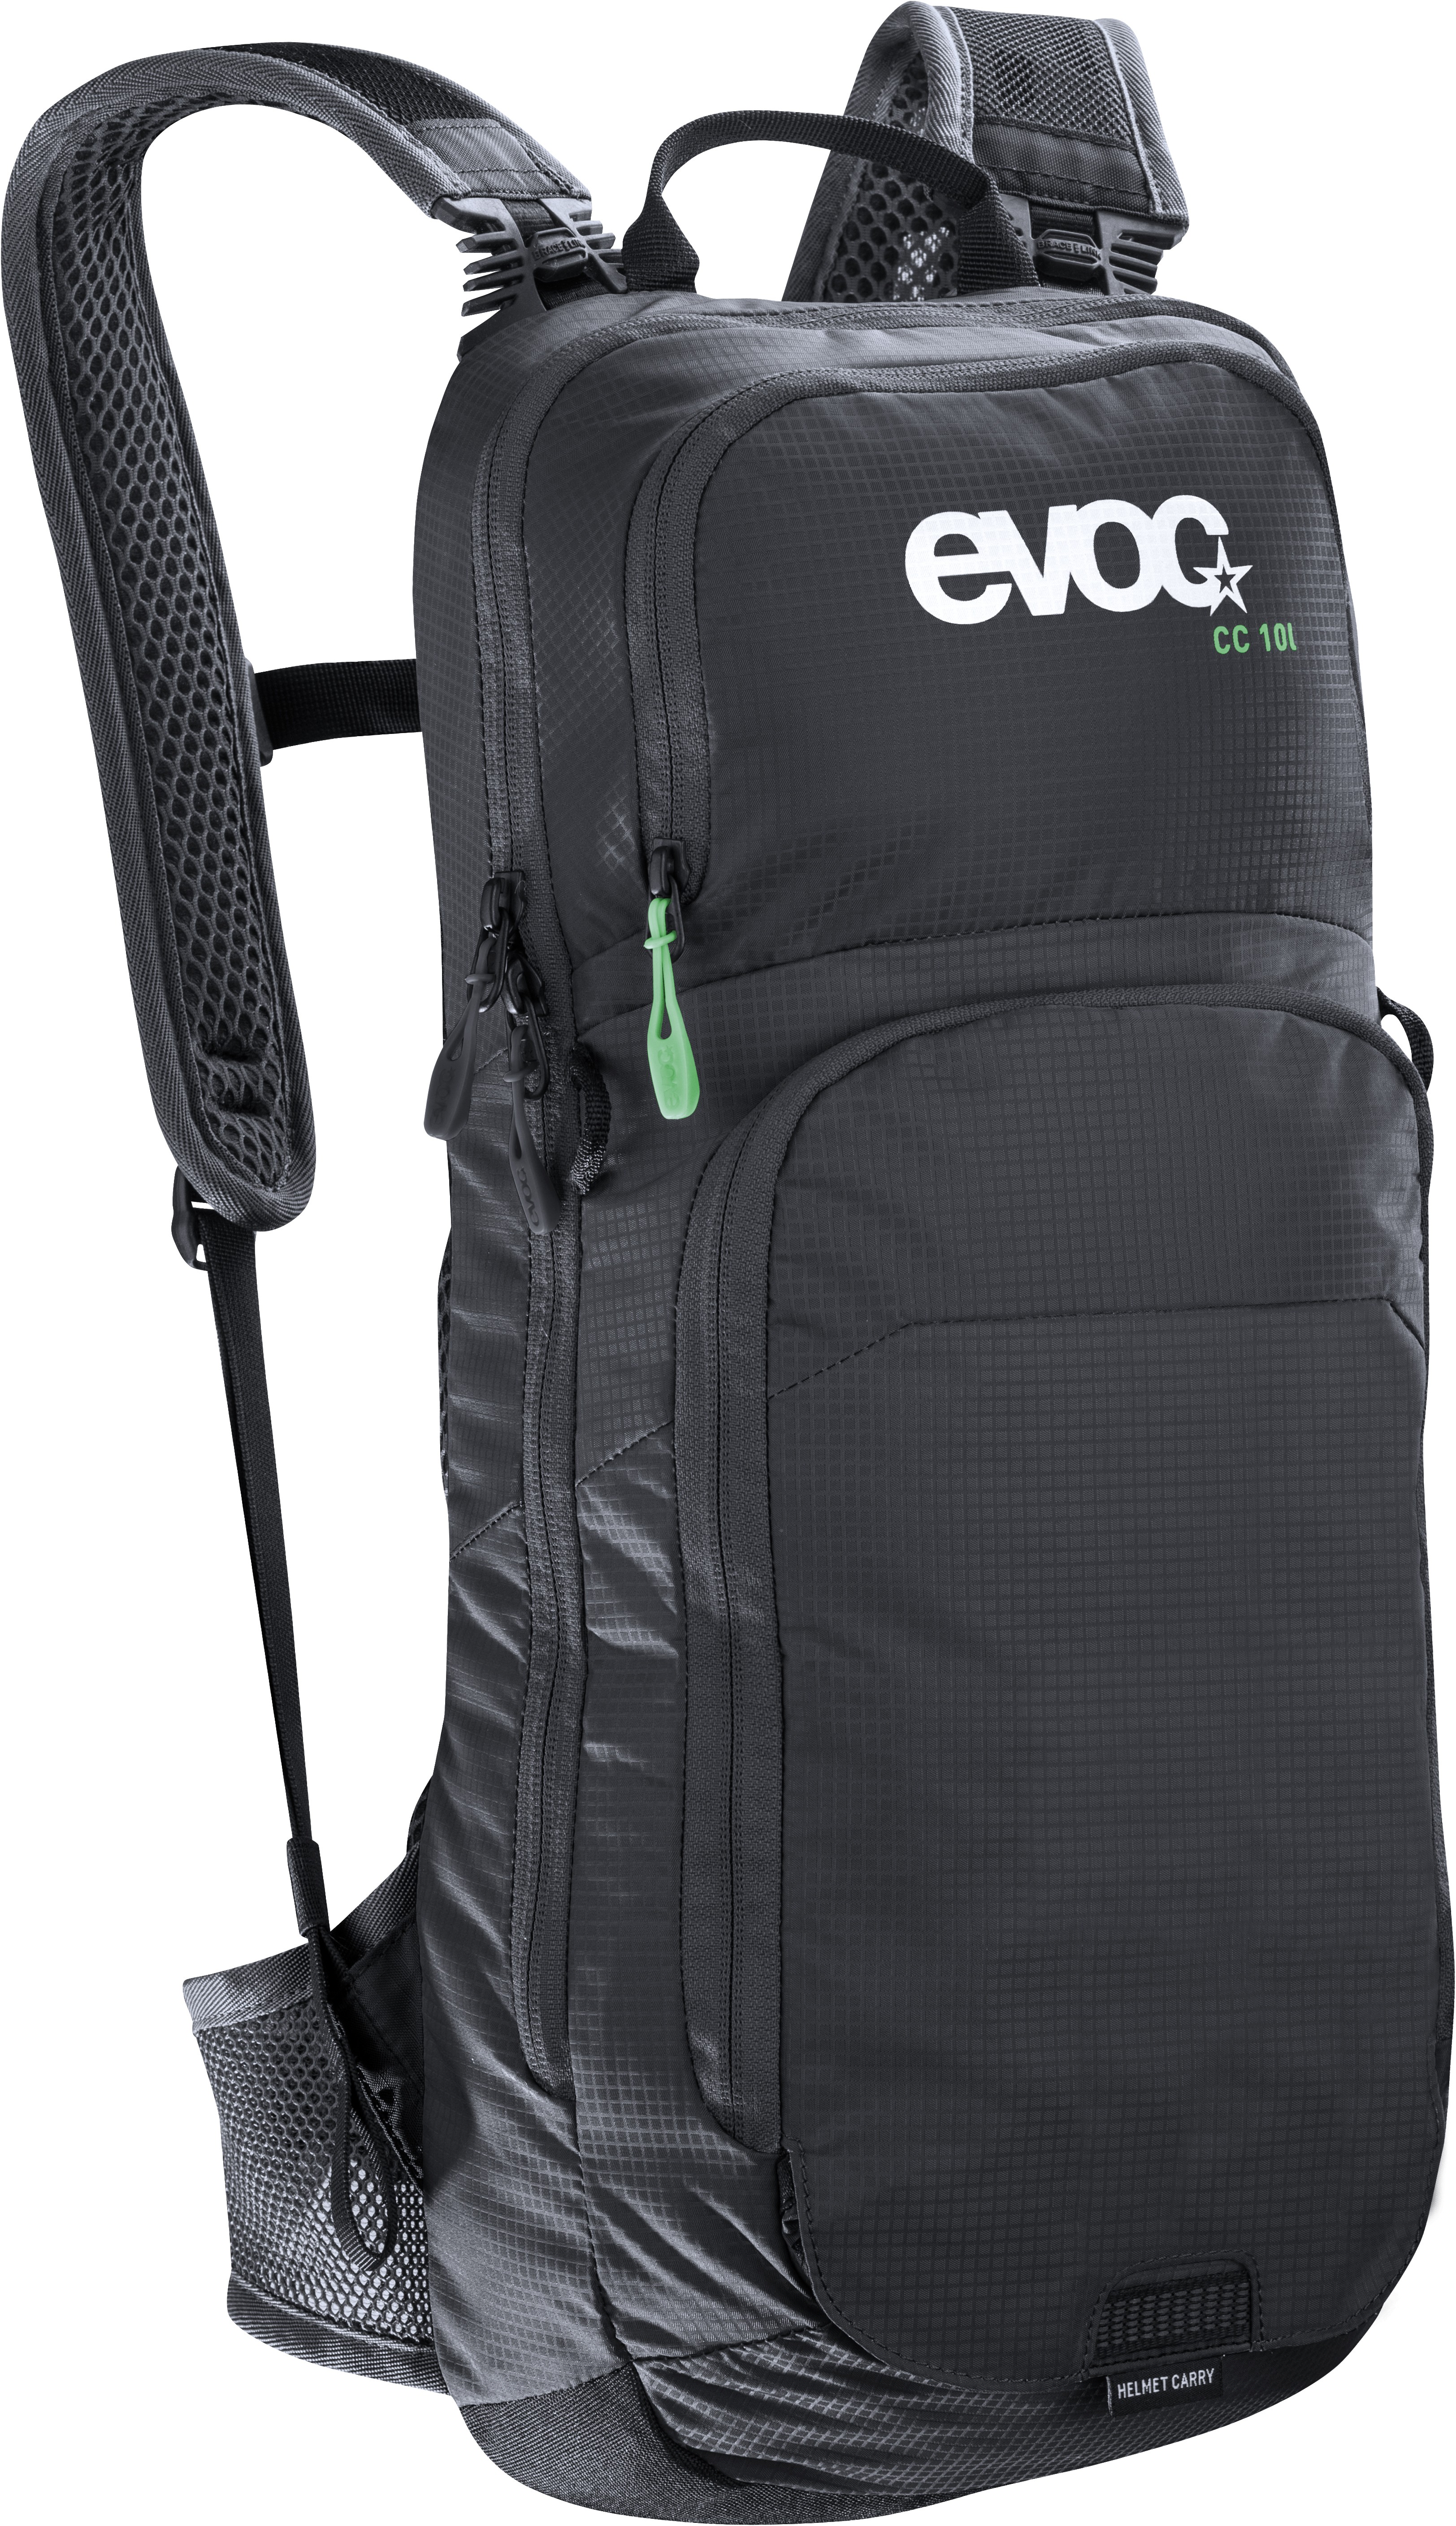 EVOC CC Backpack 10L Black